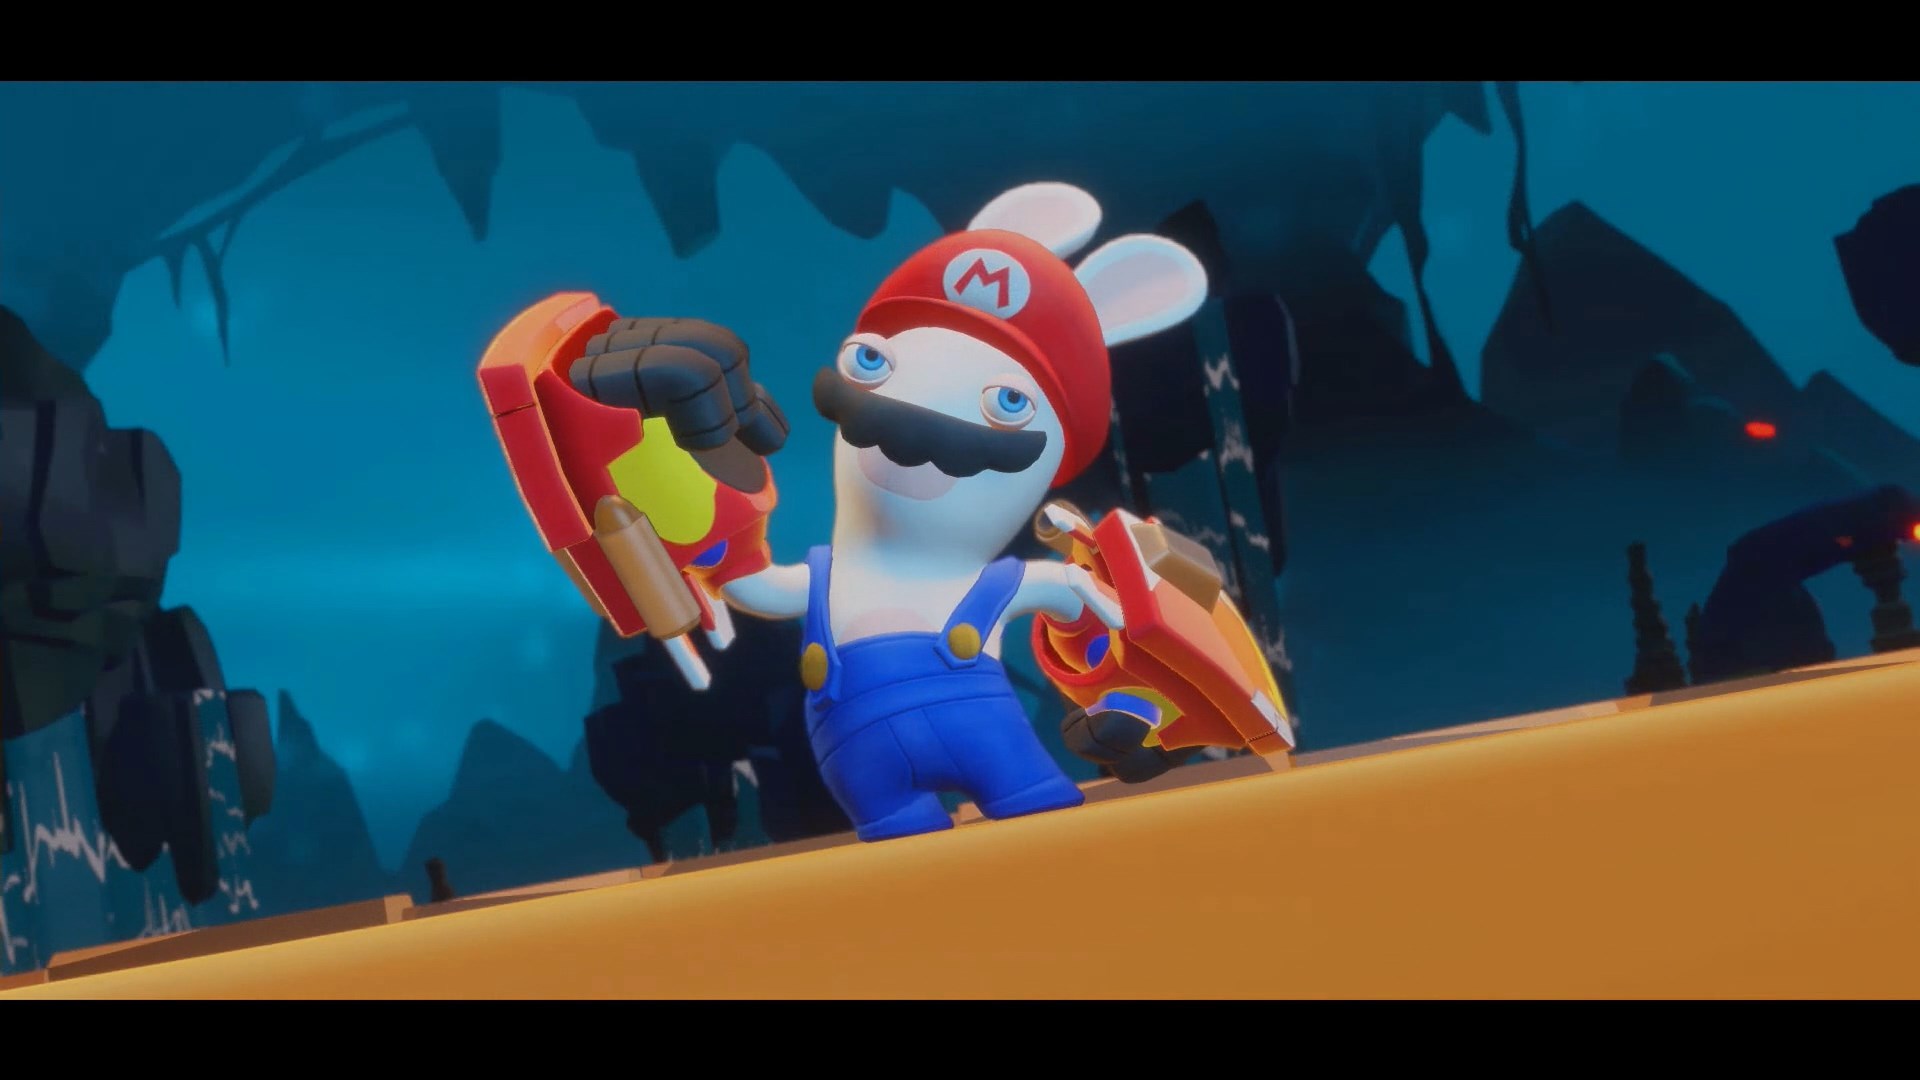 Screenshot from a cinematic: rabbid dressed as Mario